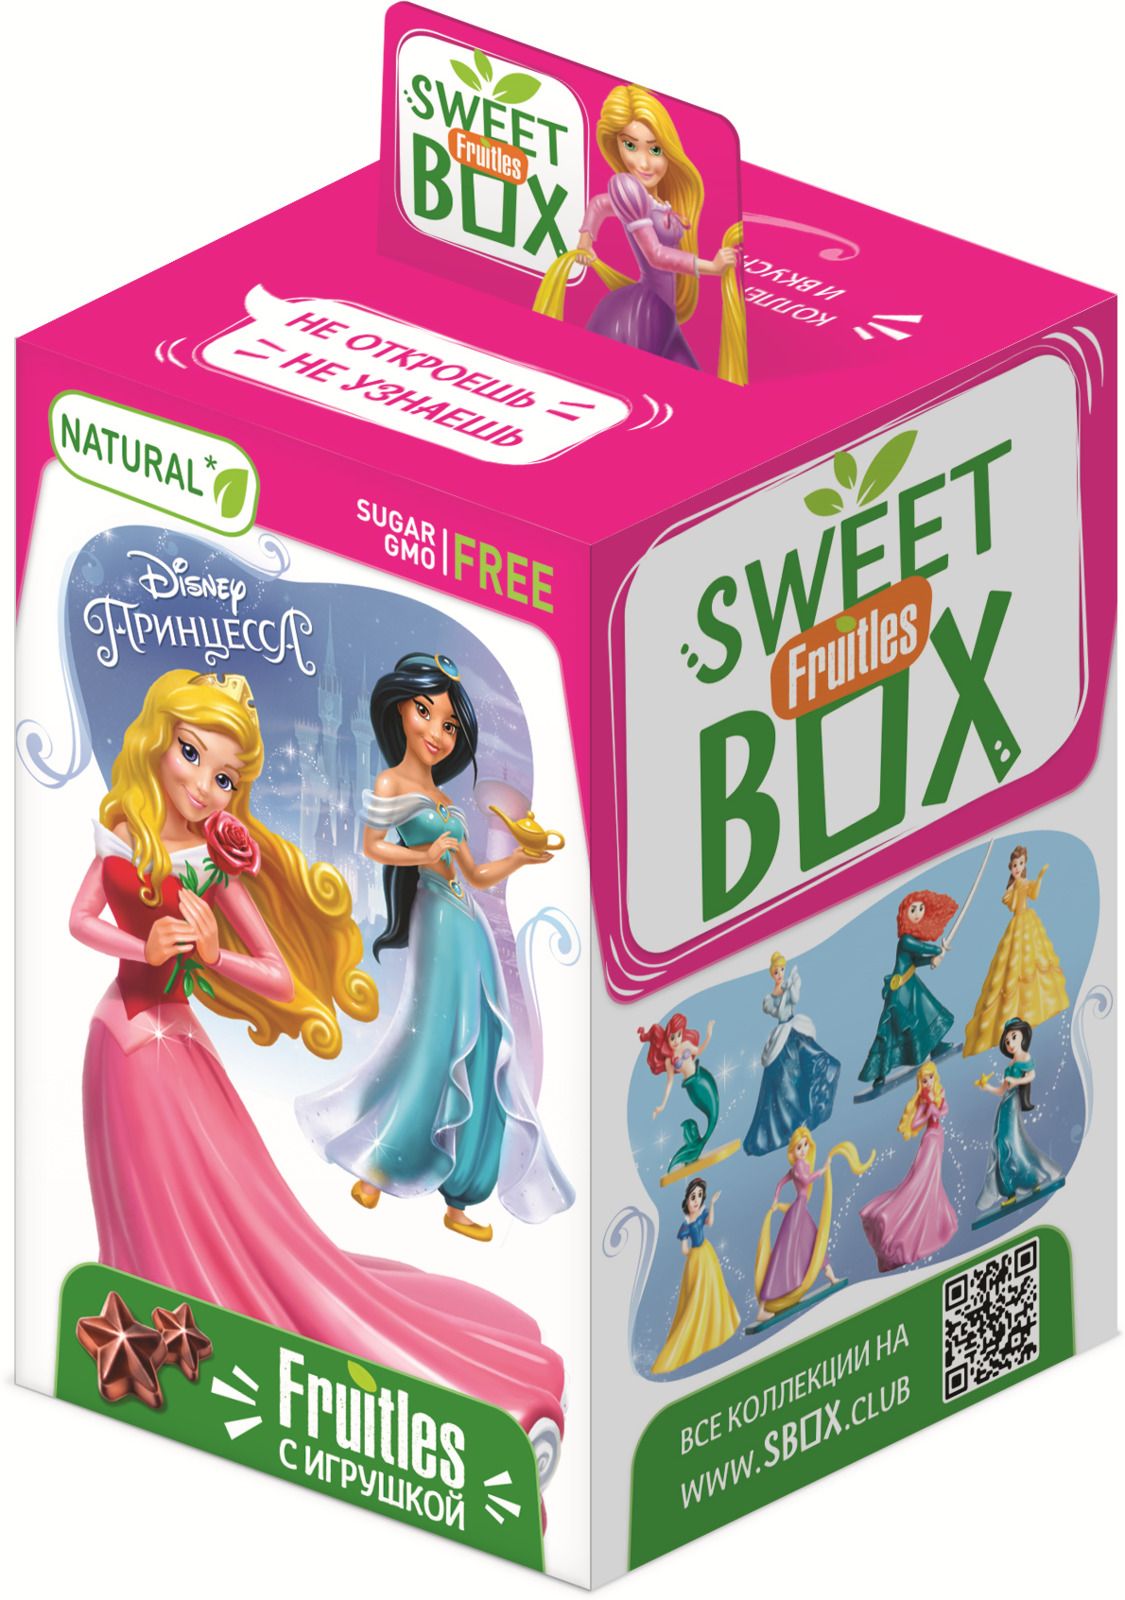 Sweet Box  Disney  Fruitles,    , 5 